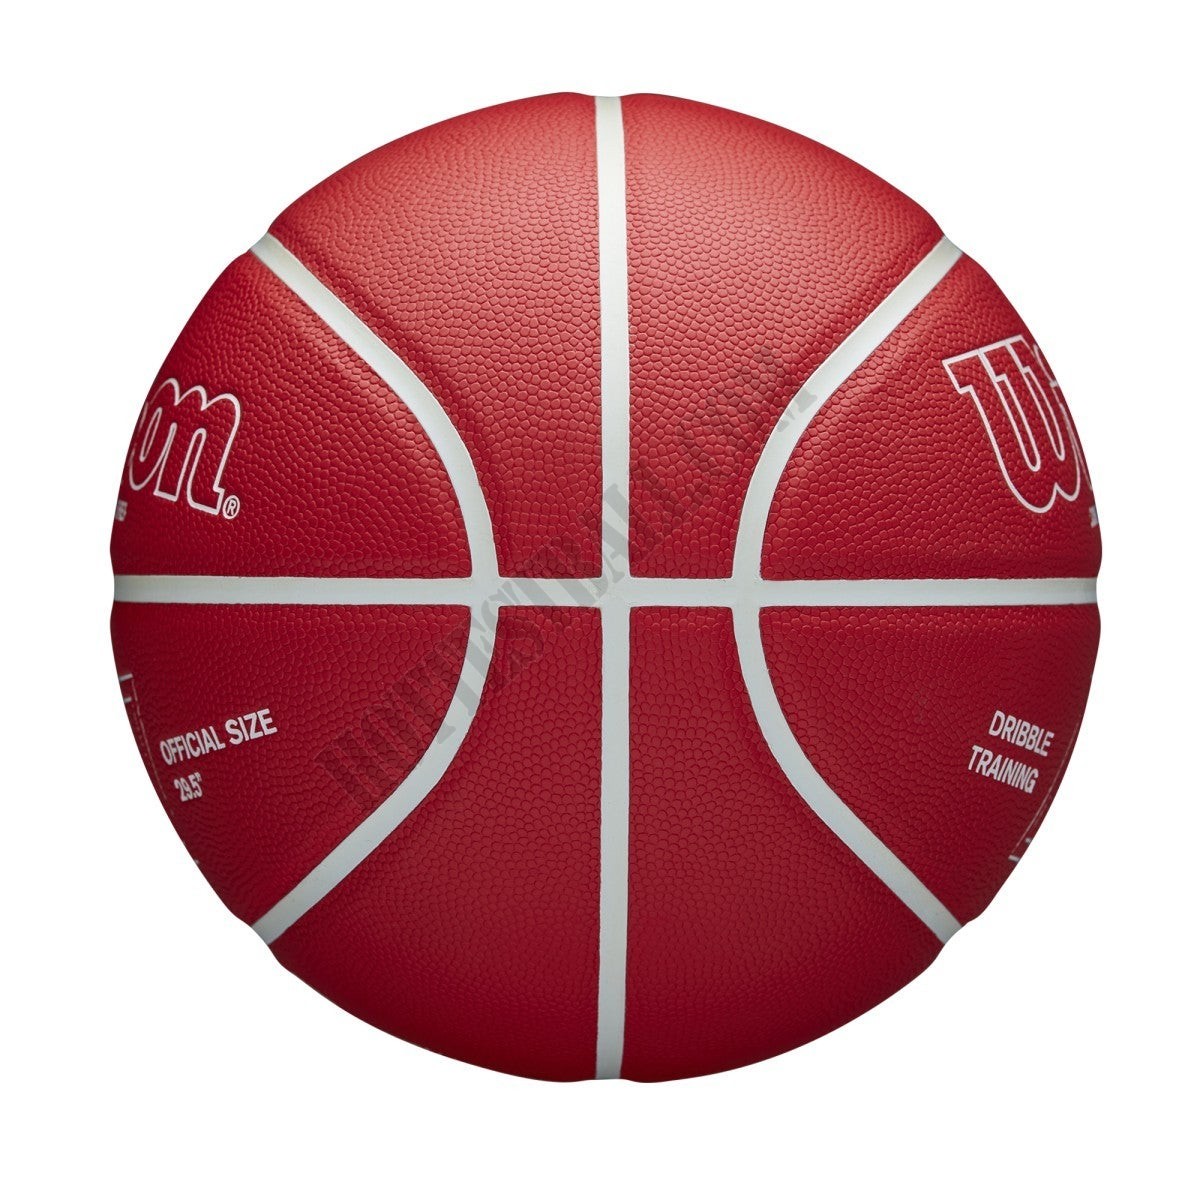 Chris Brickley Dribble Training Basketball - Wilson Discount Store - -3